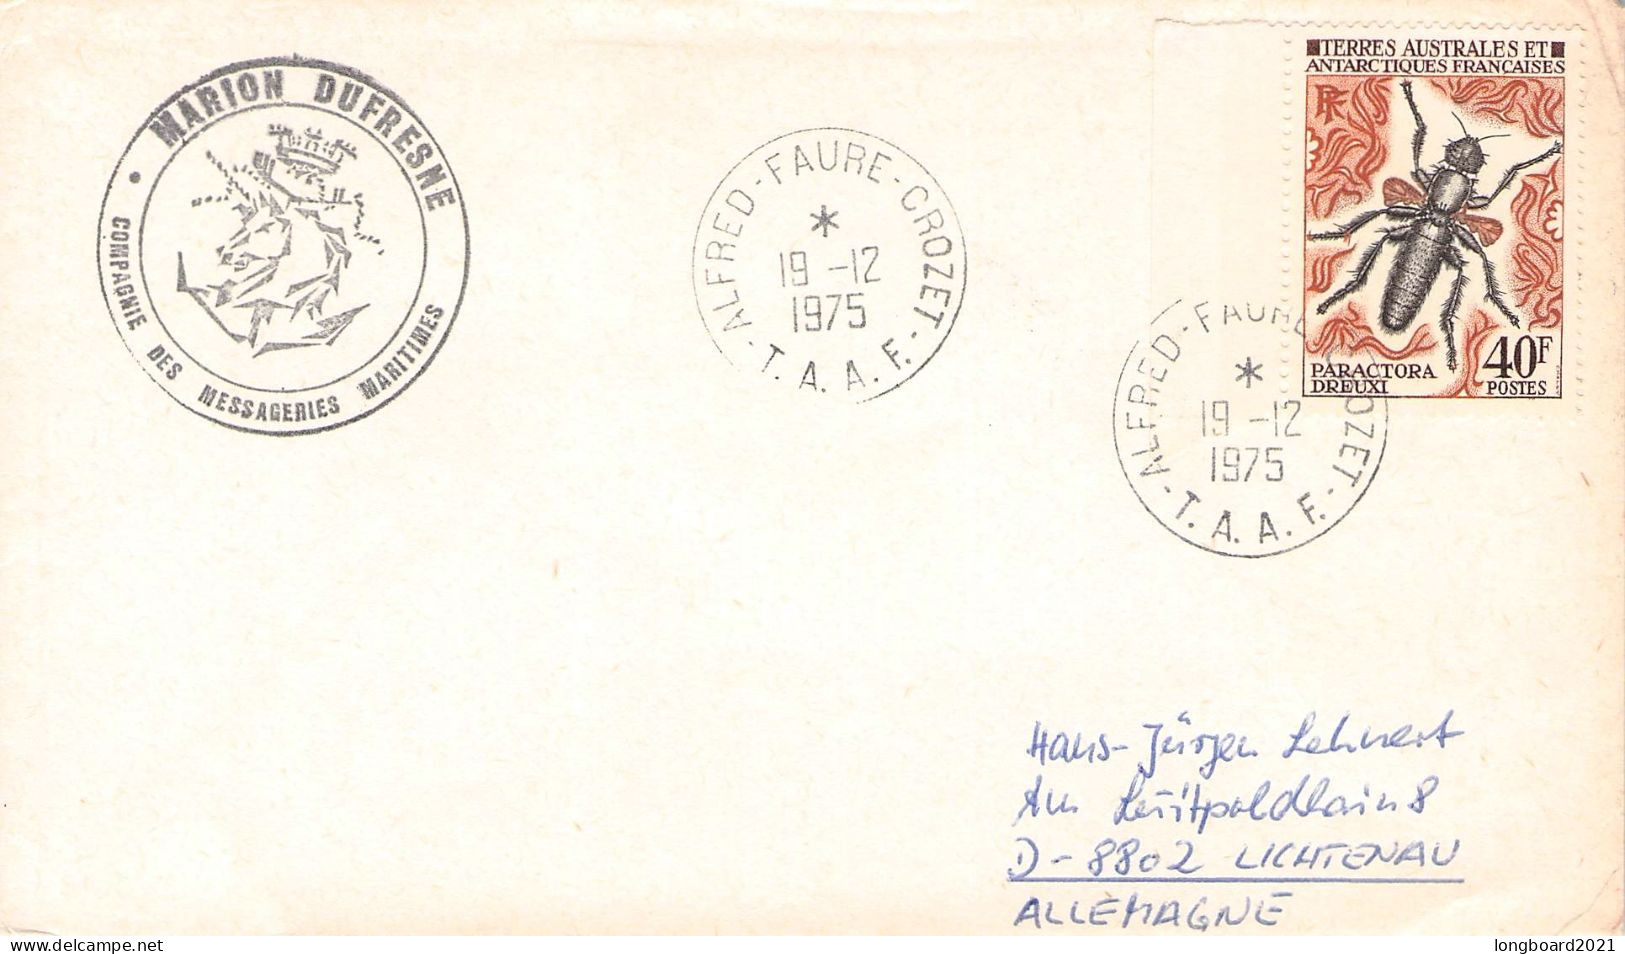 TAAF - PAQUEBOT 1975 ALFRED-FAURE-CROZET - /DE Mi 72 / *1199 - Briefe U. Dokumente